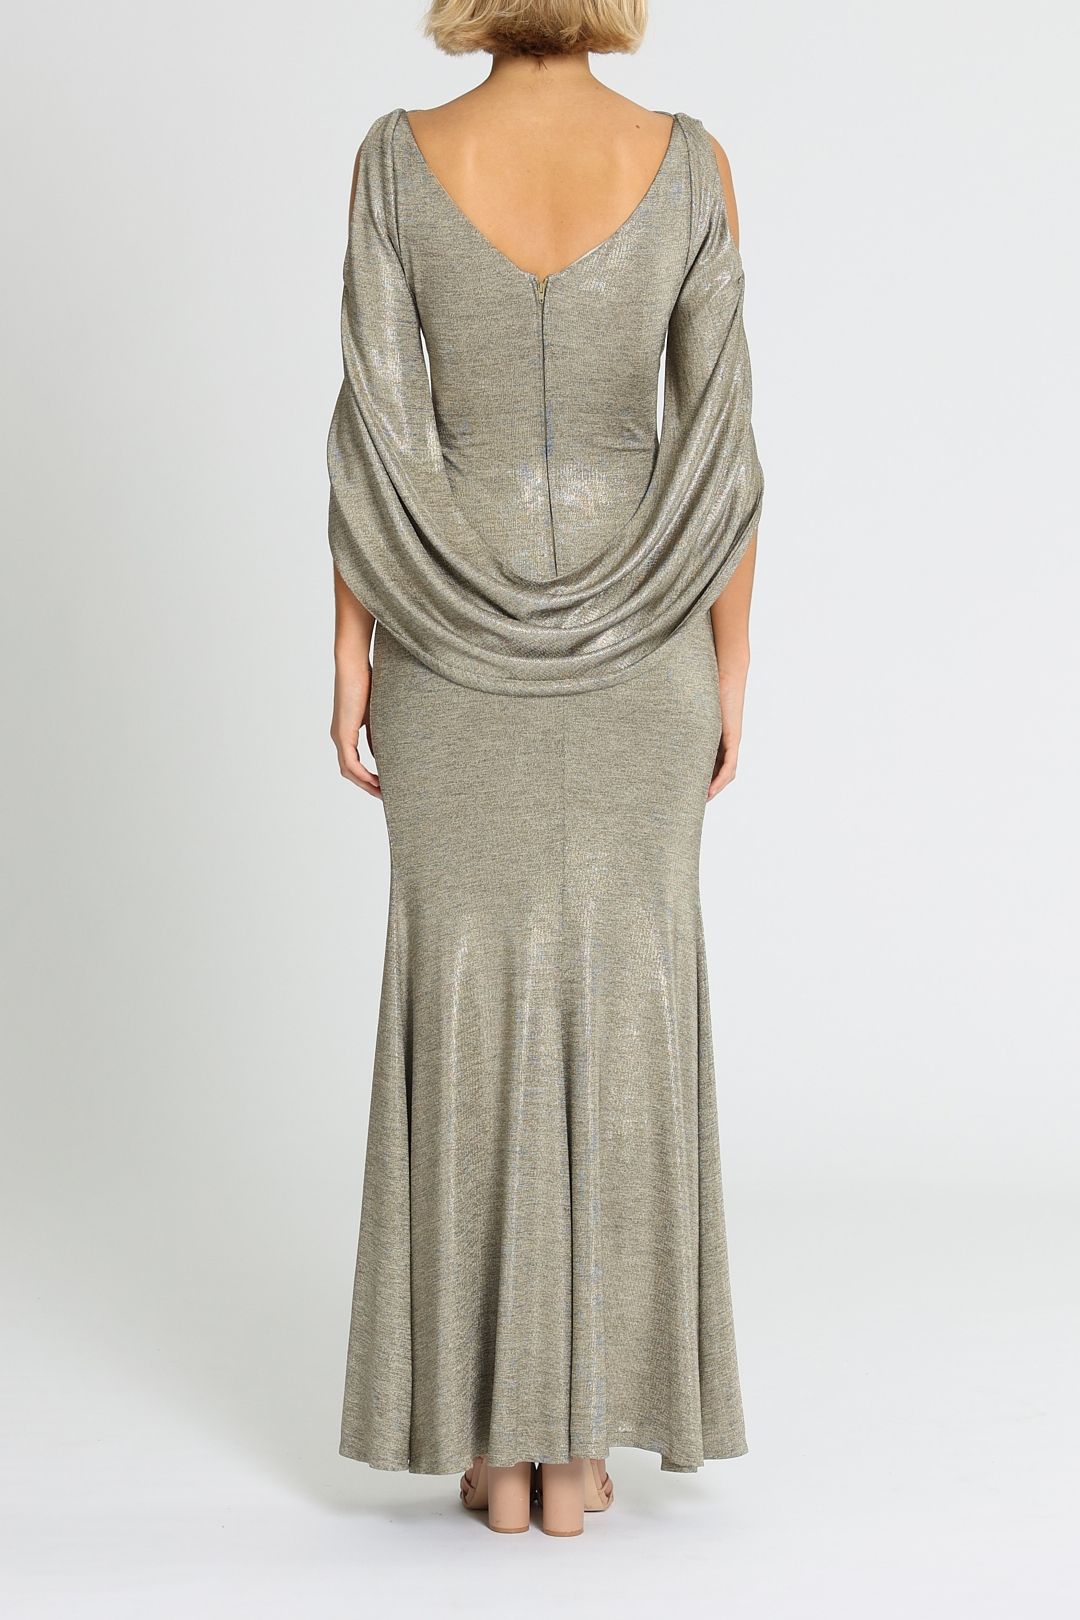 Montique  Lana Metallic Gown Drape